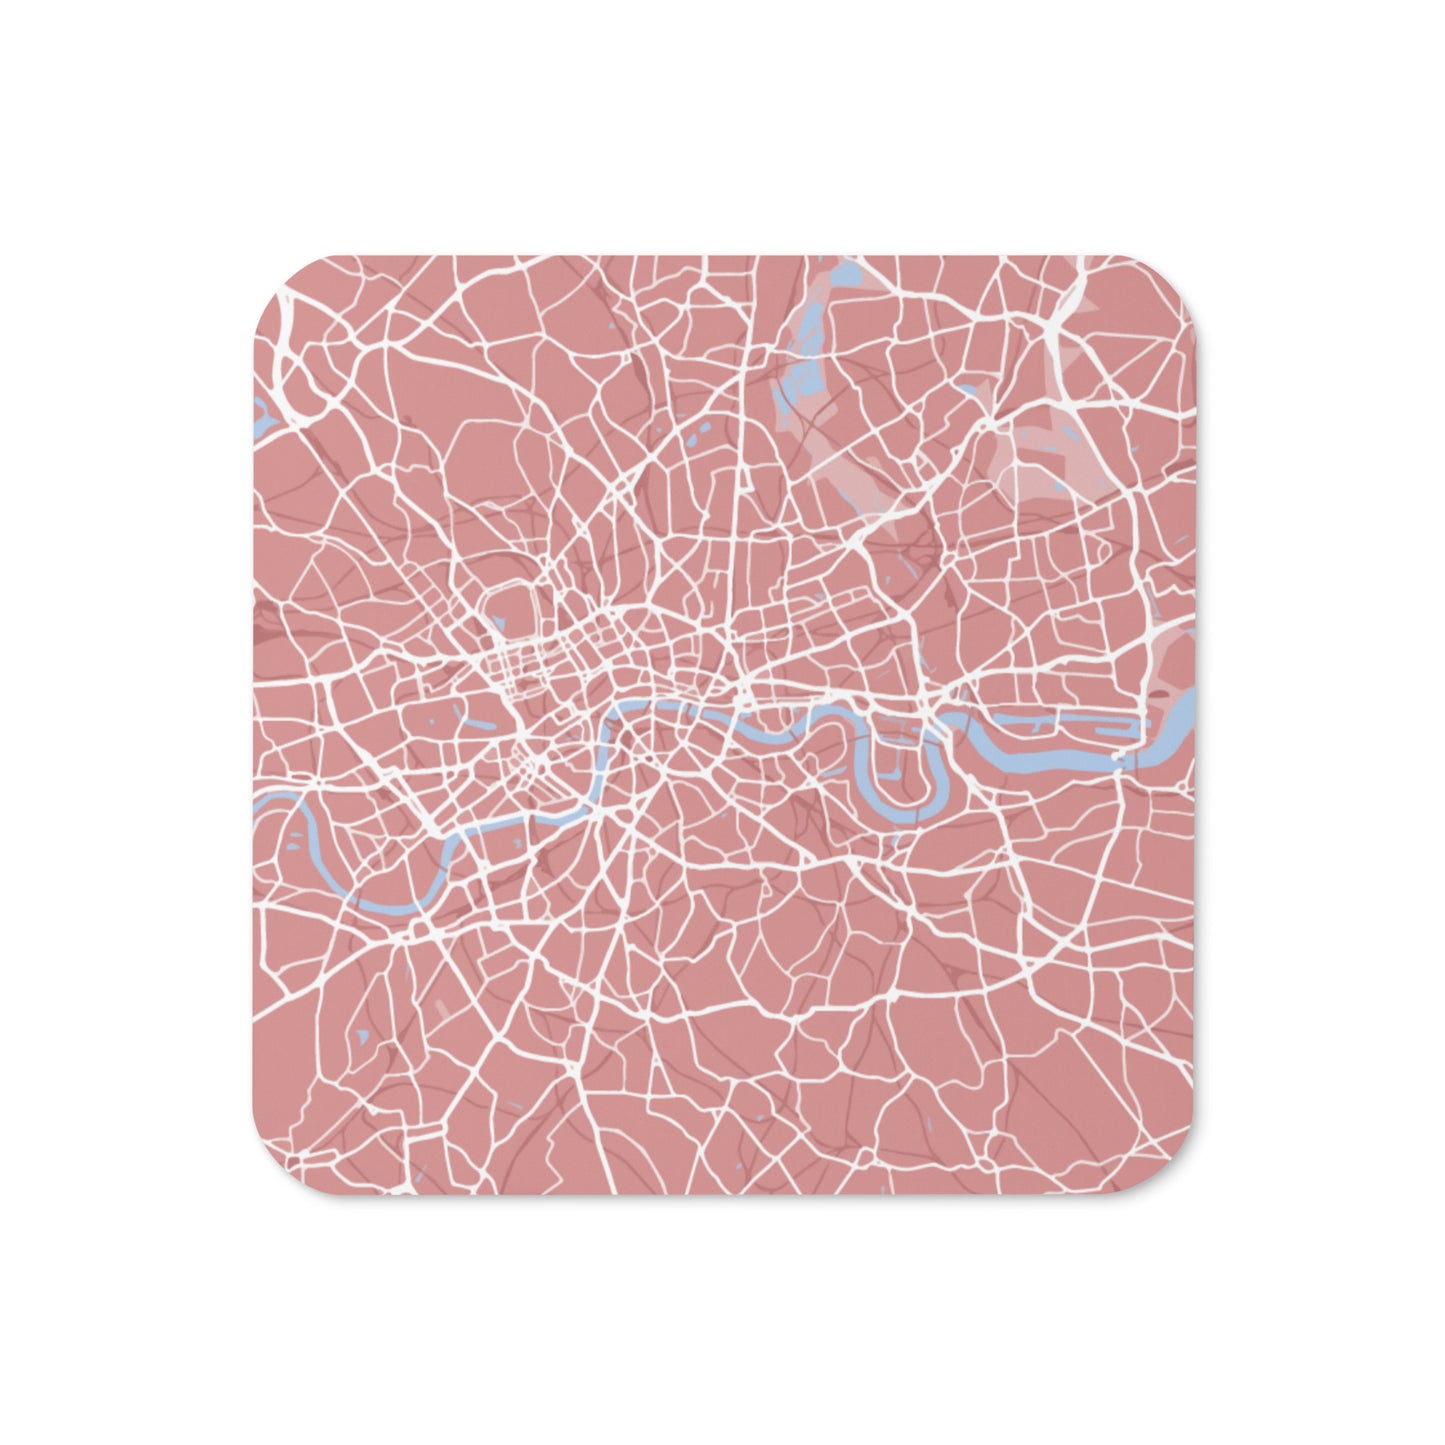 Map of London, England - Cork-back coaster